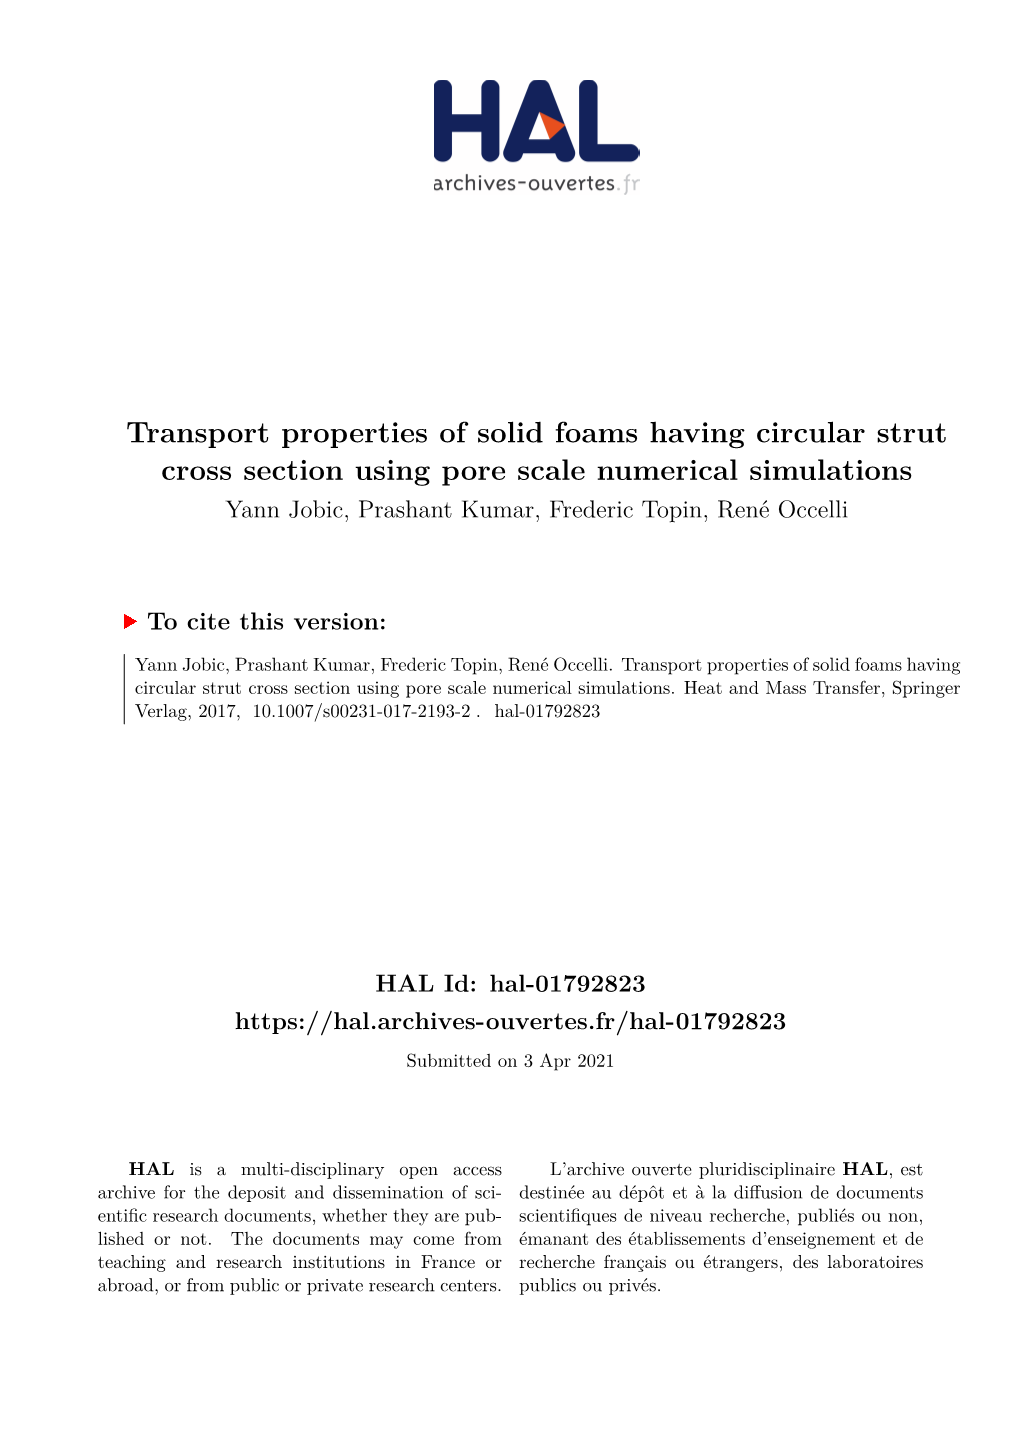 Transport Properties of Solid Foams Having Circular Strut Cross Section